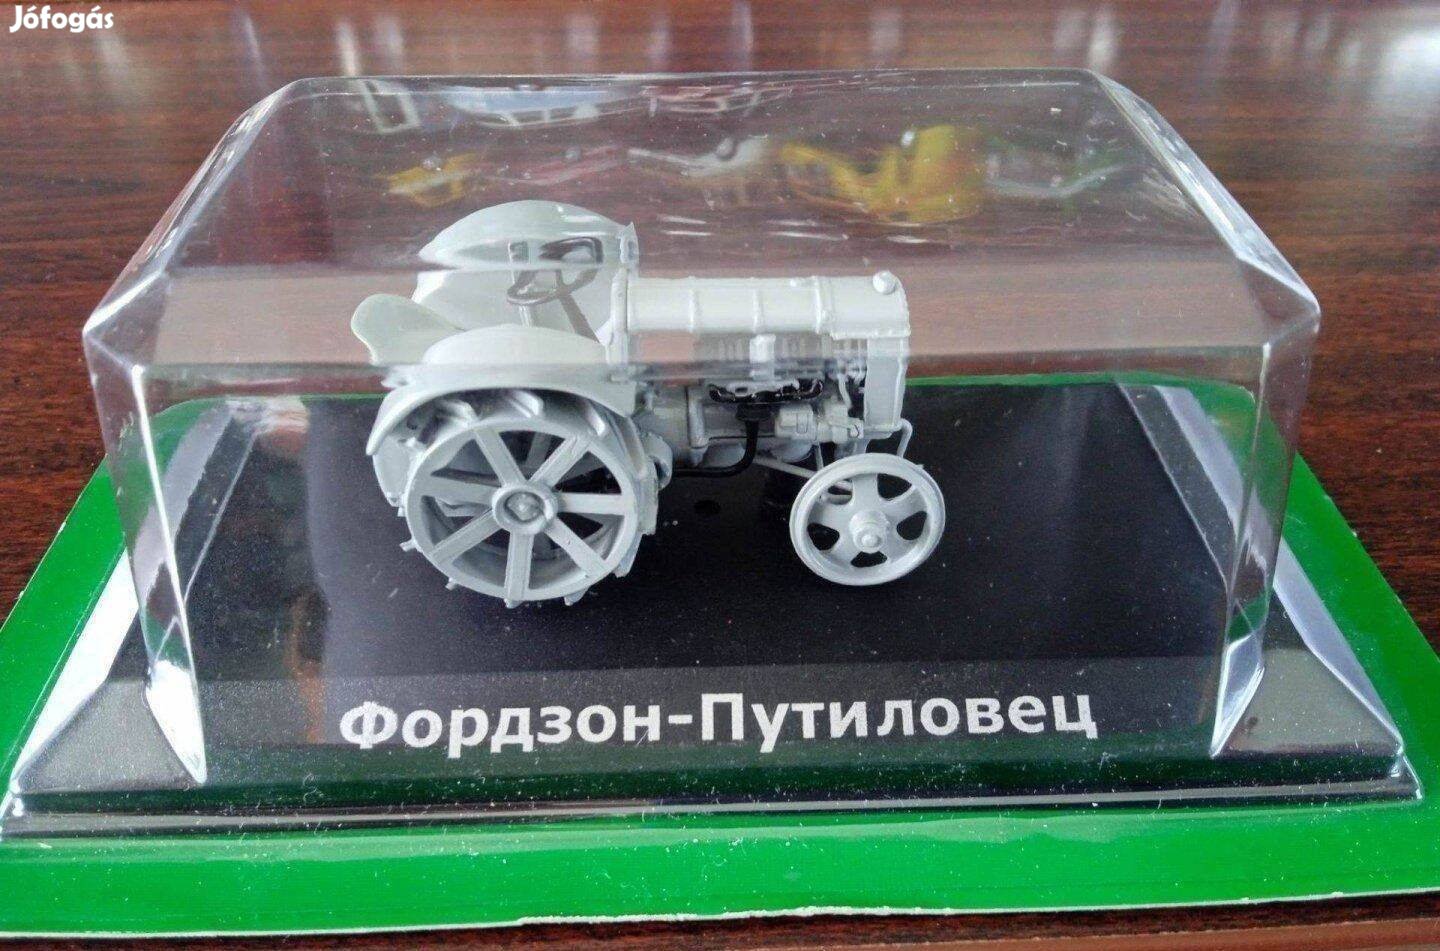 Fordzon-Putilovec traktor kisauto modell 1/43 Eladó